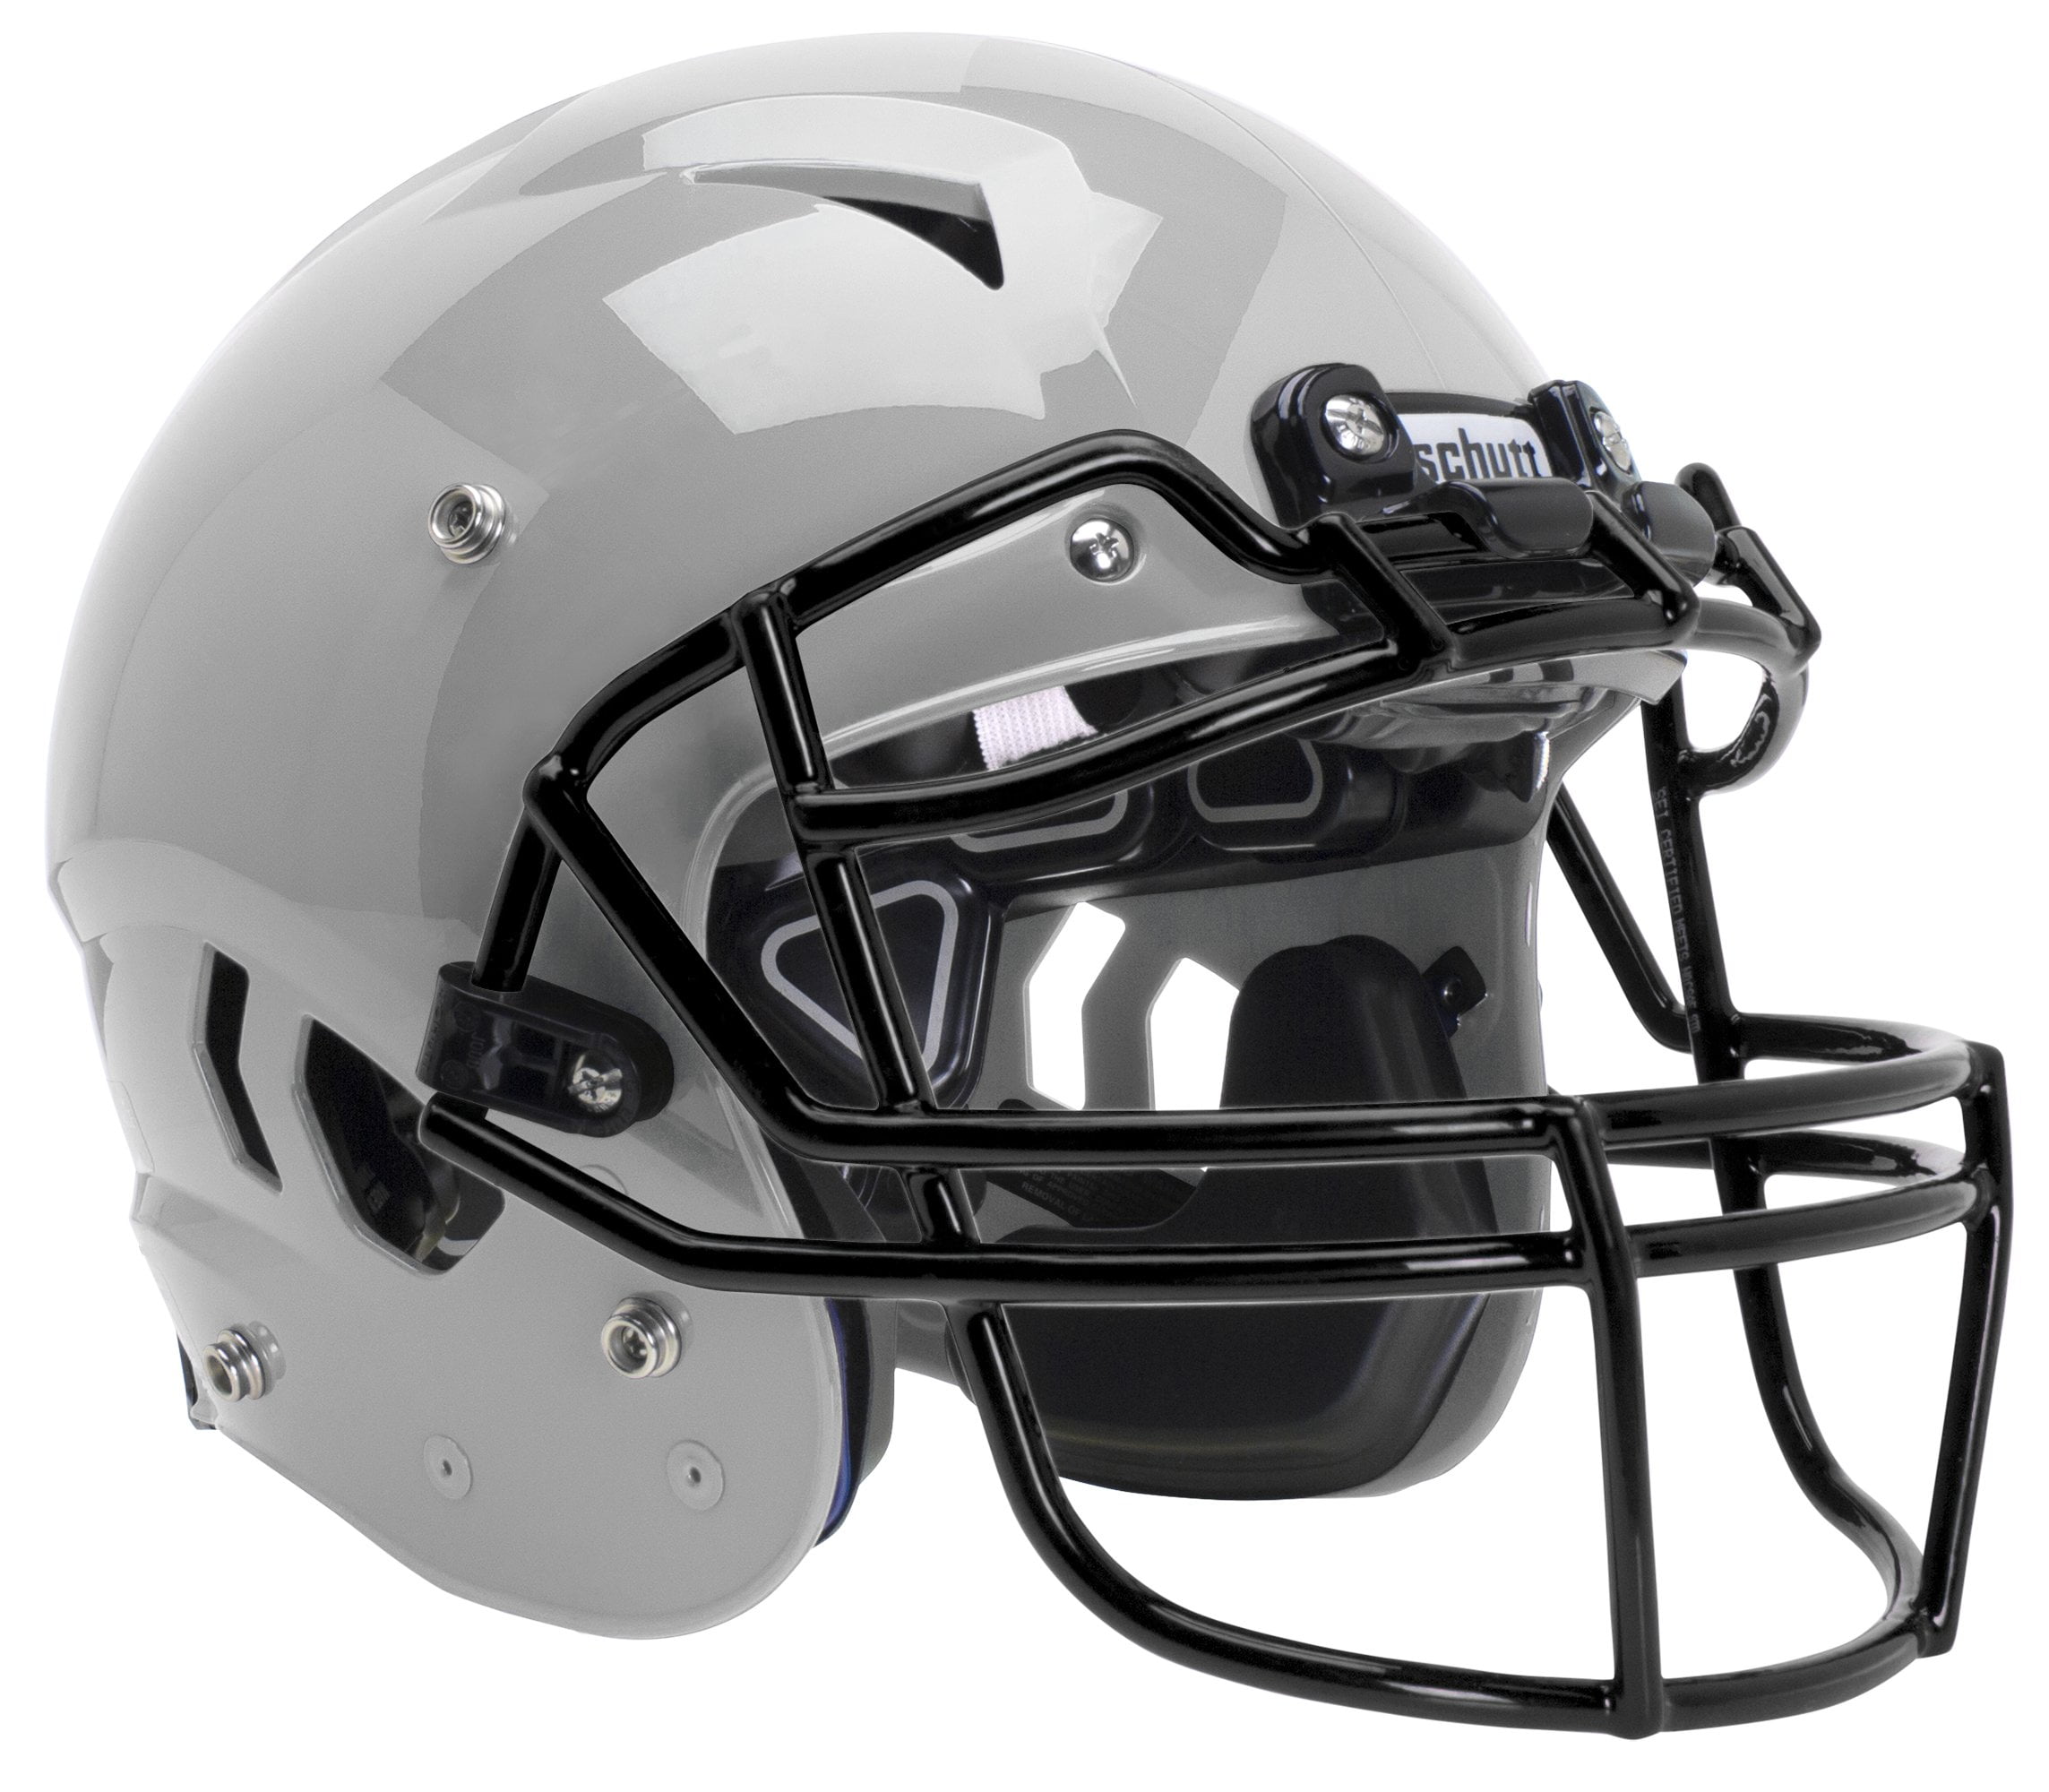 Schutt Vengeance Pro american football helmet Large Black with faceguard 